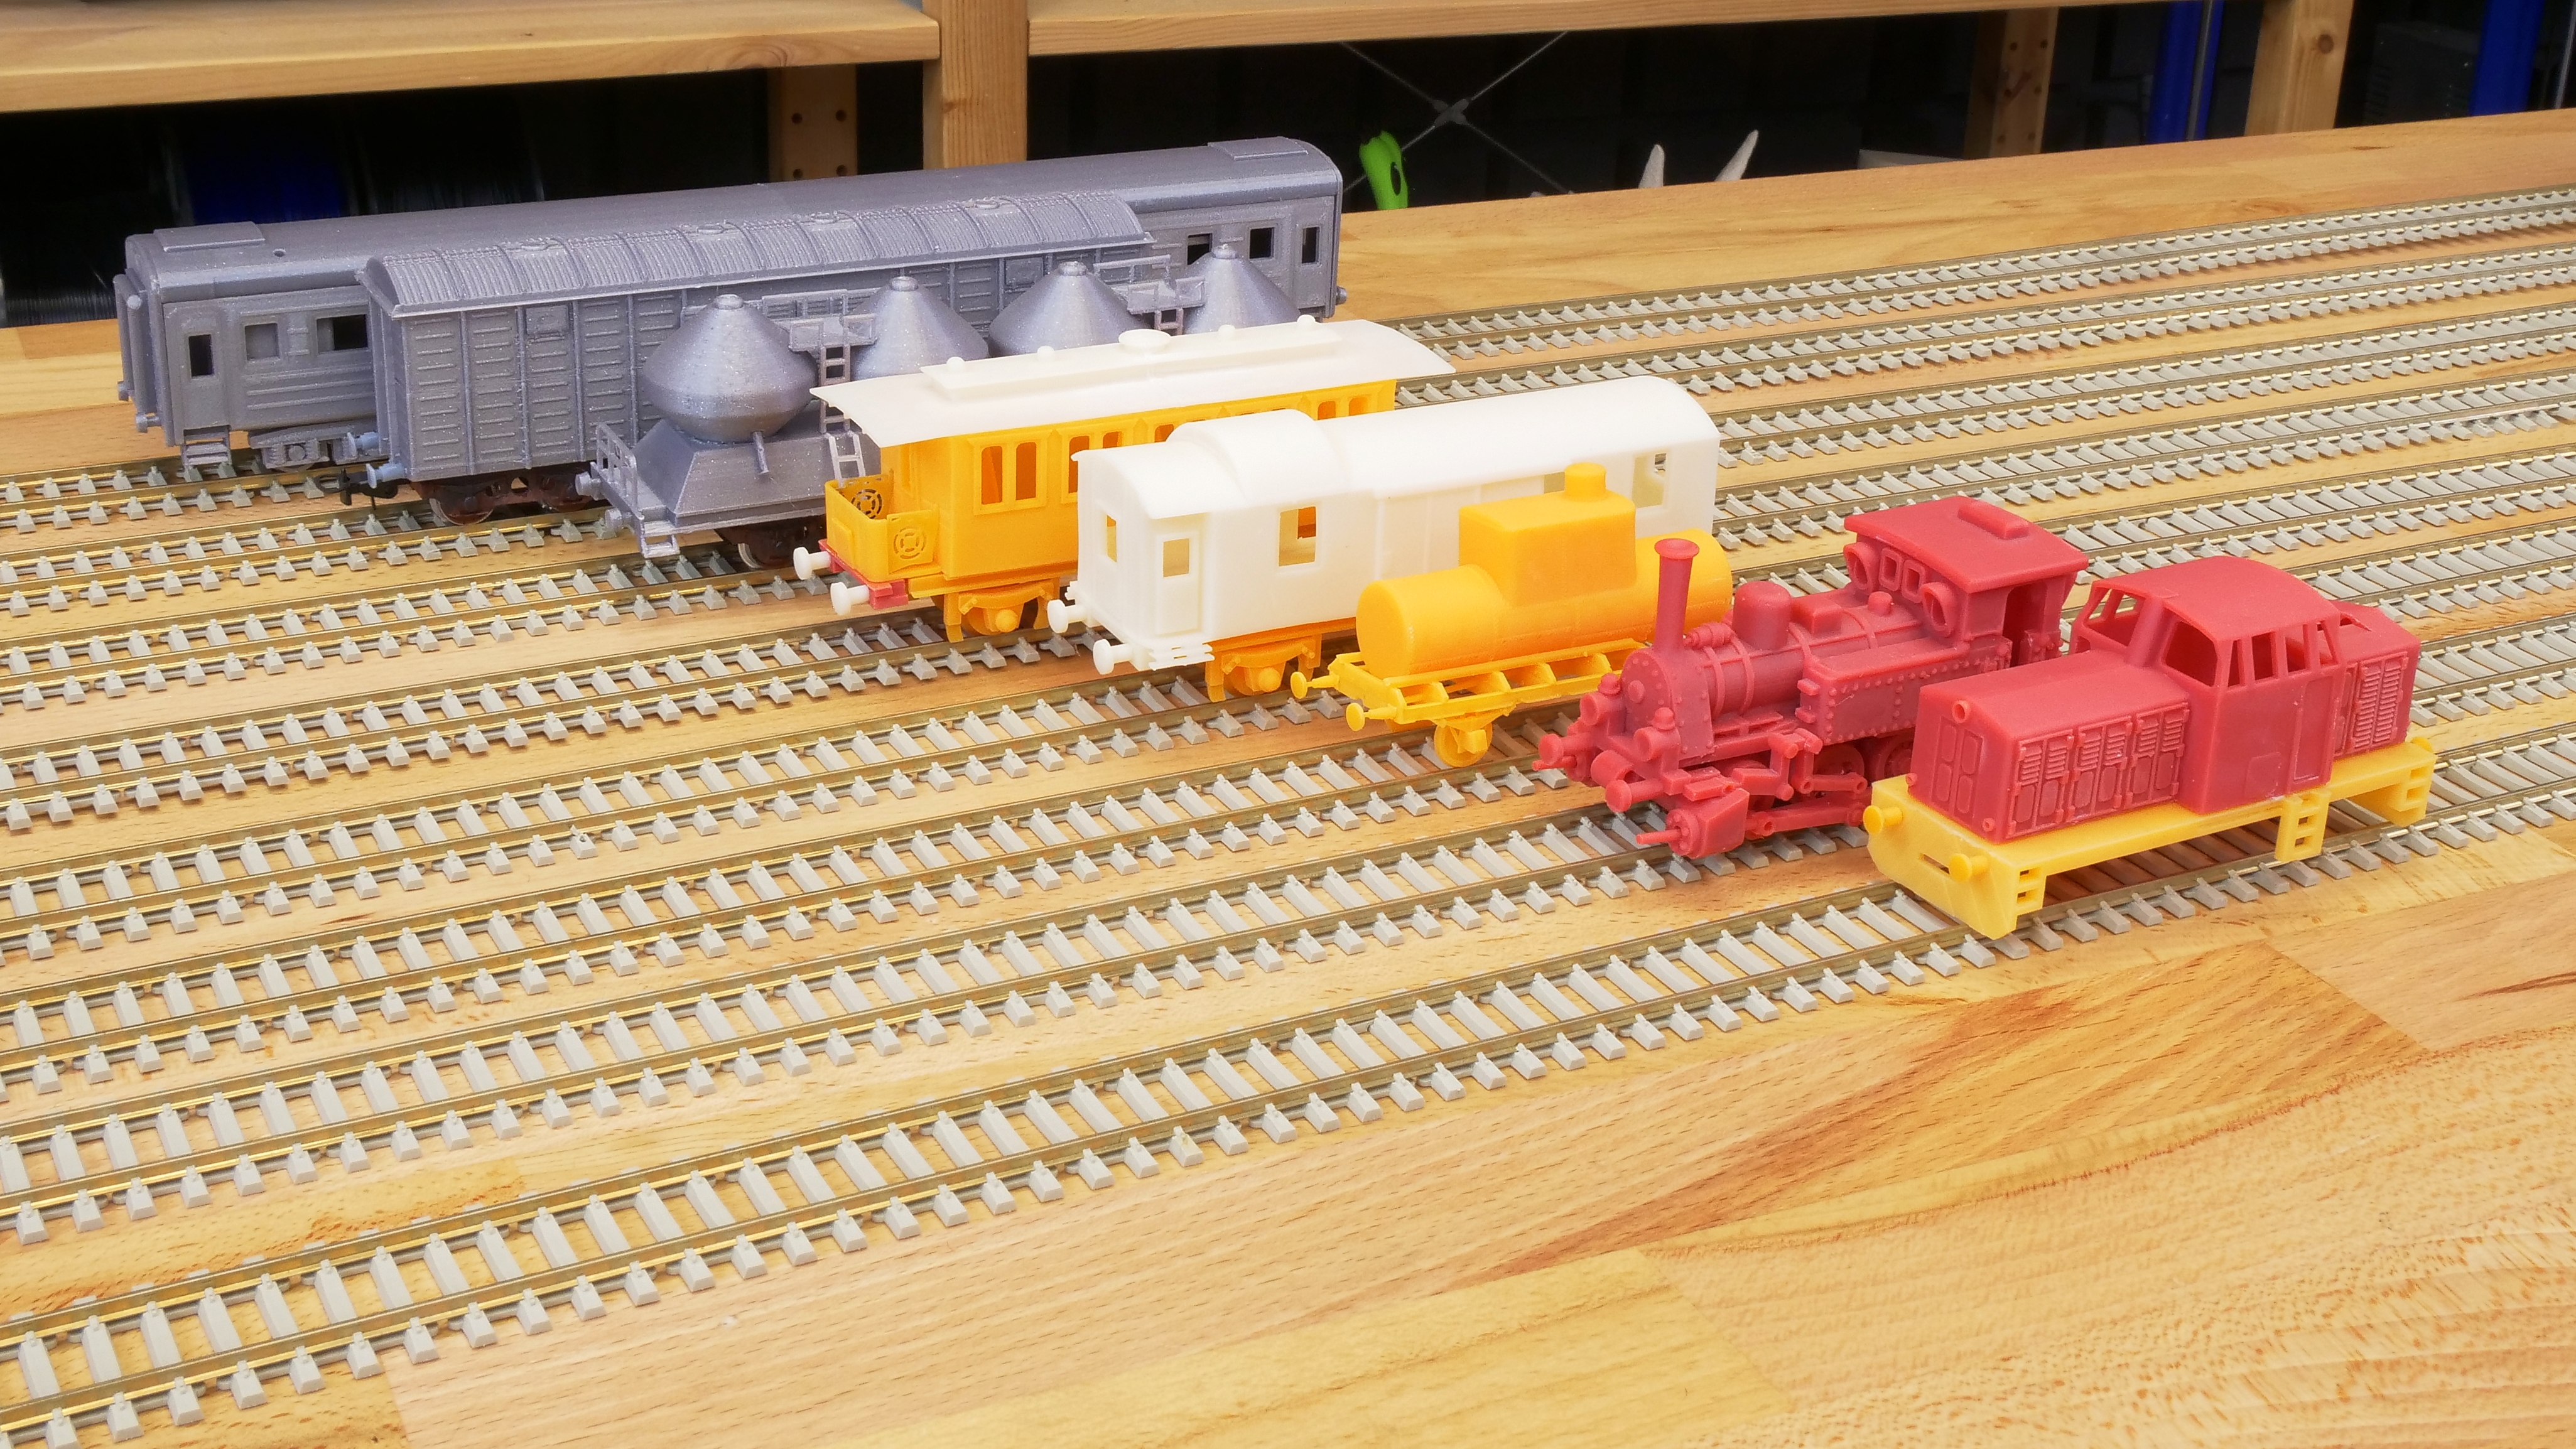 3d Printed Railway Models Part Ii Trains And Buildings Prusa